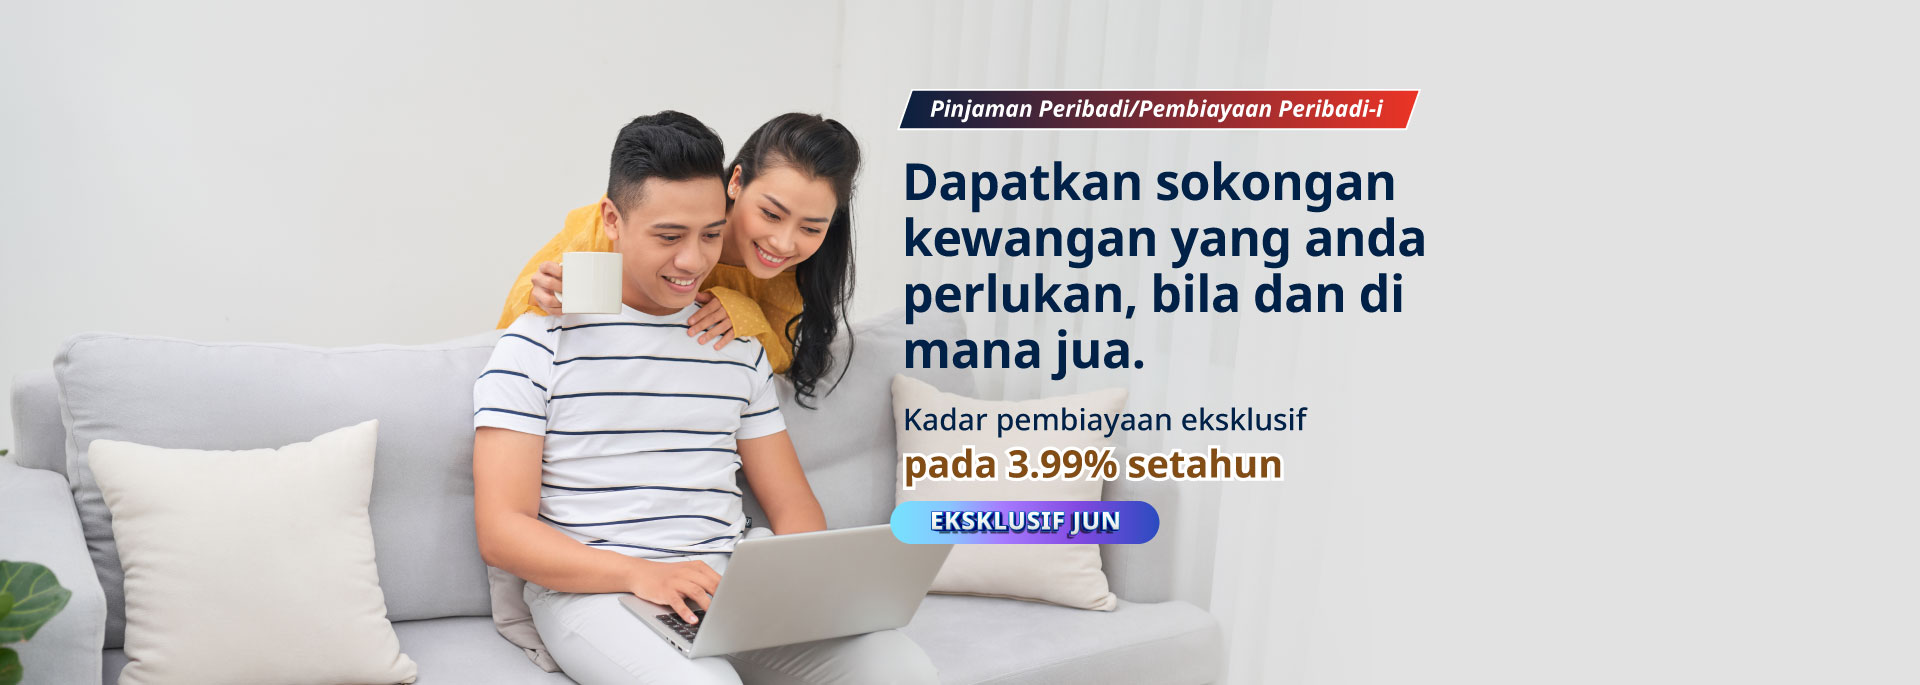 Pinjaman Peribadi/Pembiayaan Peribadi-i Tawaran Eksklusif Connect Online June